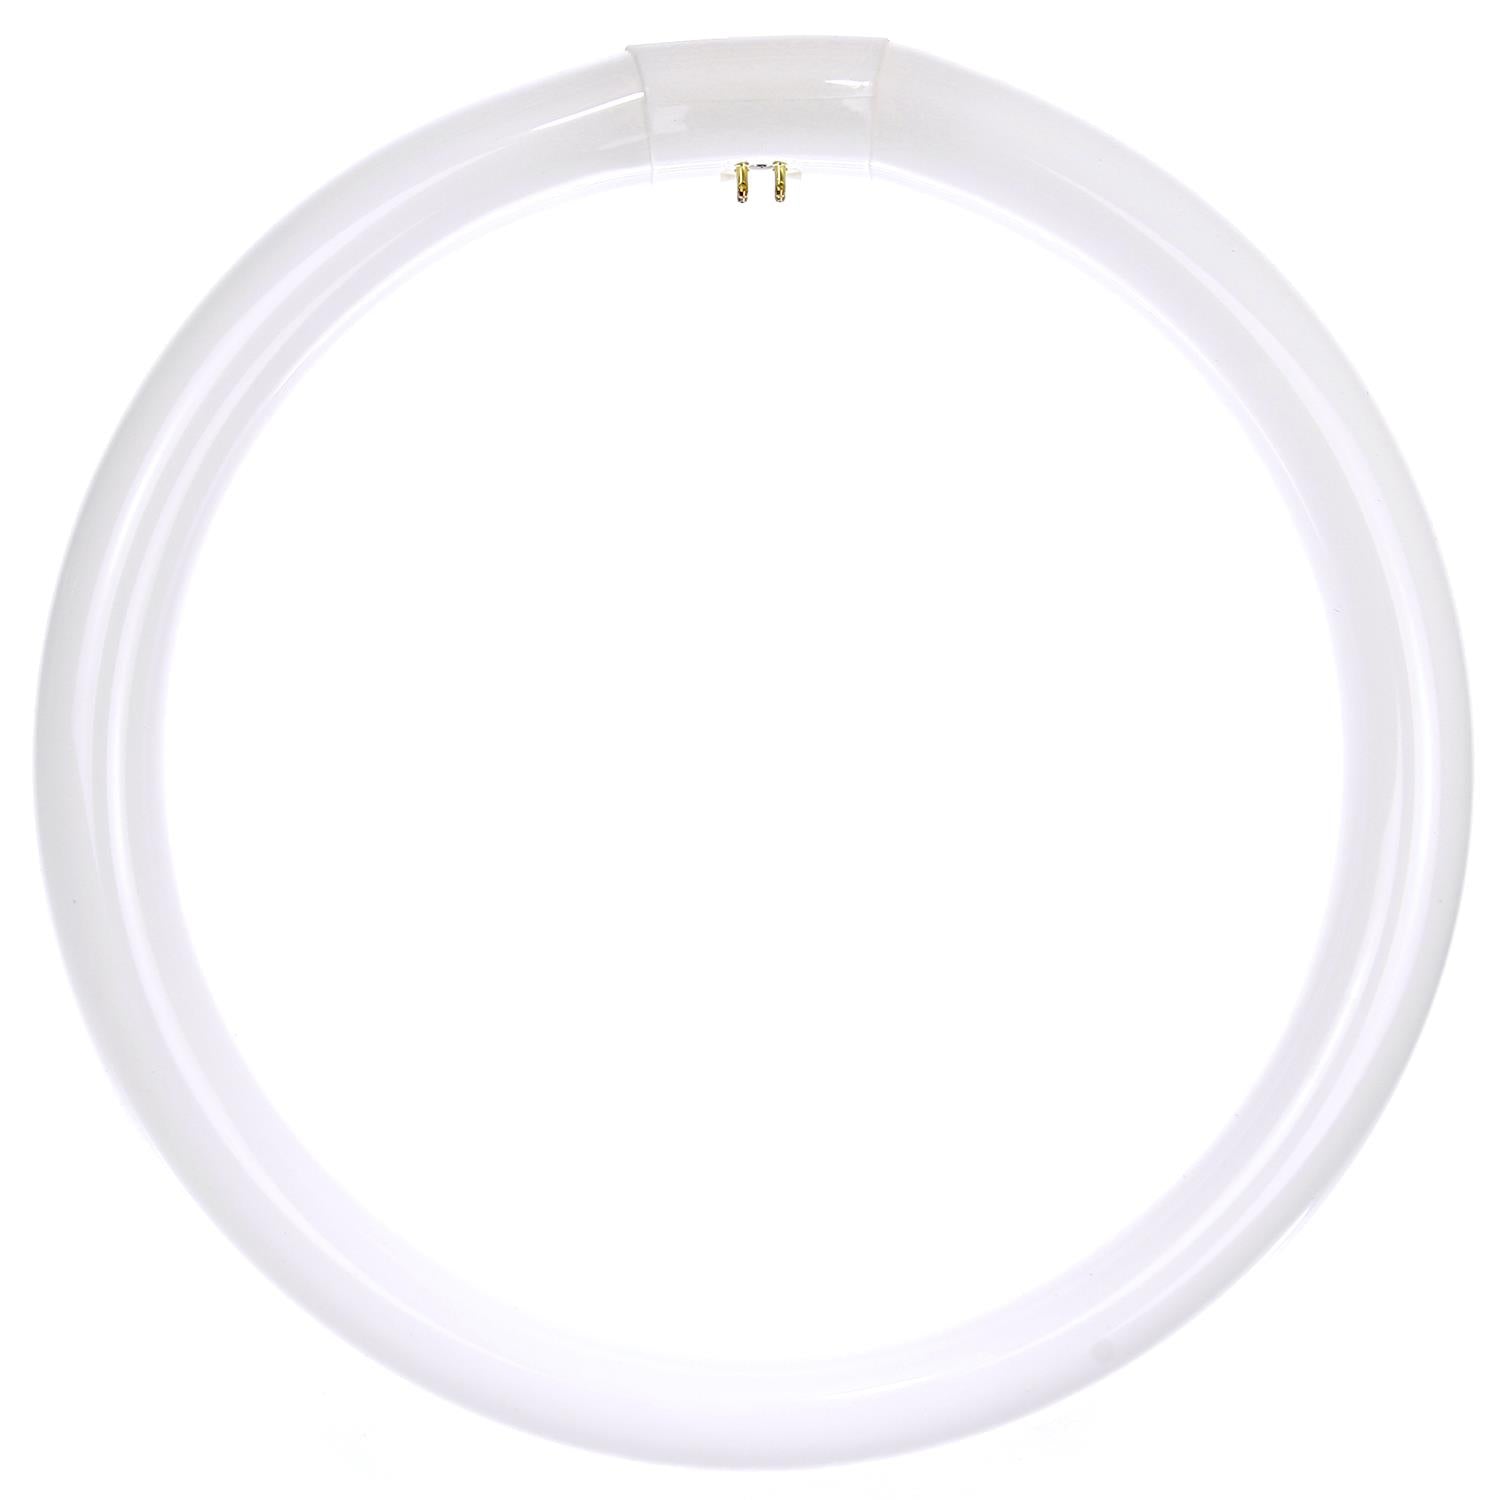 SUNLITE FC12T9/DL 32W 12 inch T9 Daylight Circline 4-Pin Light Bulb